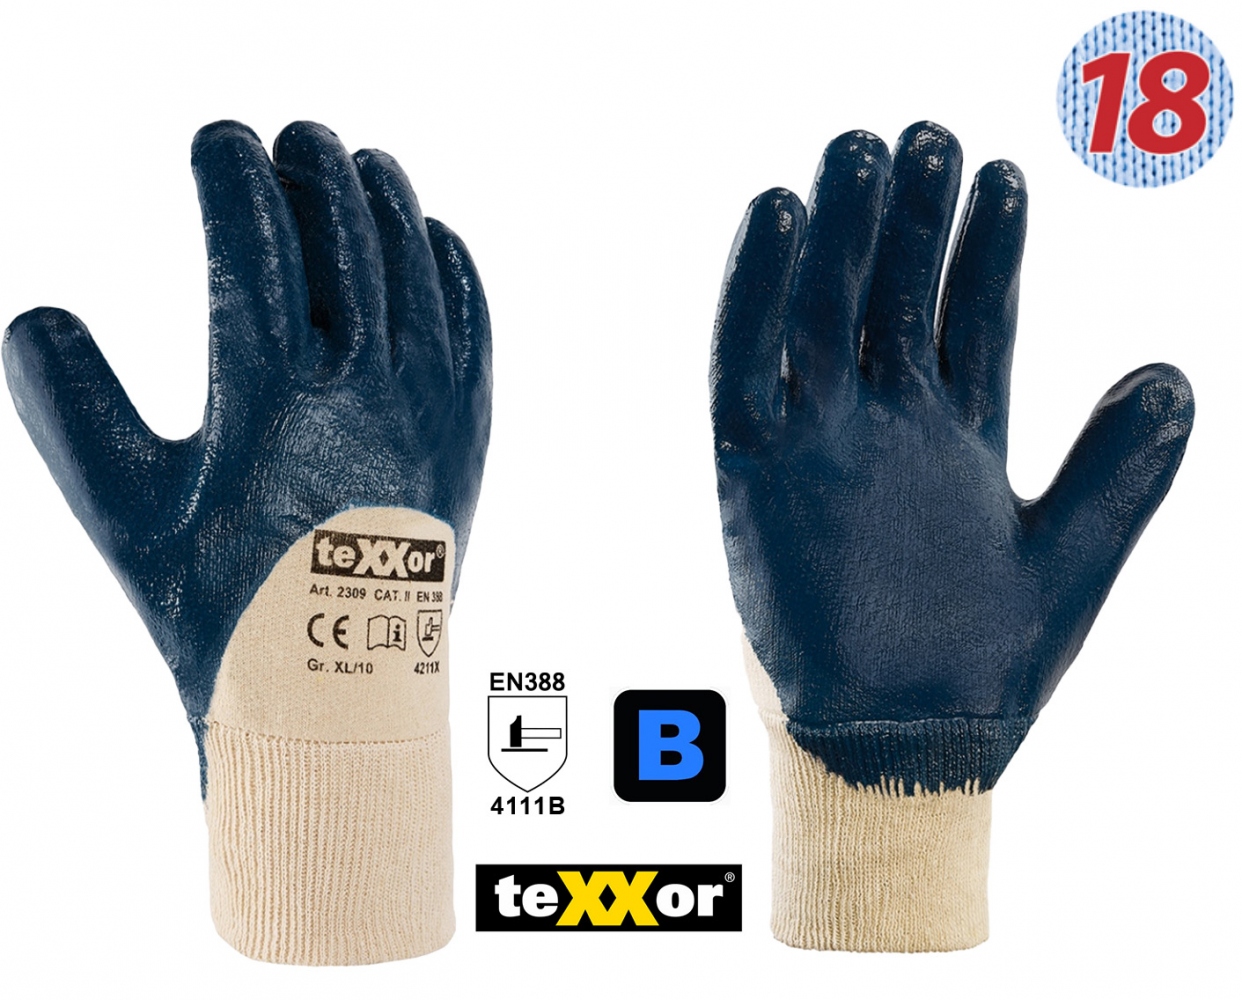 pics/BIG Arbeit/Texxor Handschuhe/texxor-2309-blaue-3-4-nitril-schnittschutzhandschuhe-level-b-en388-02.jpg